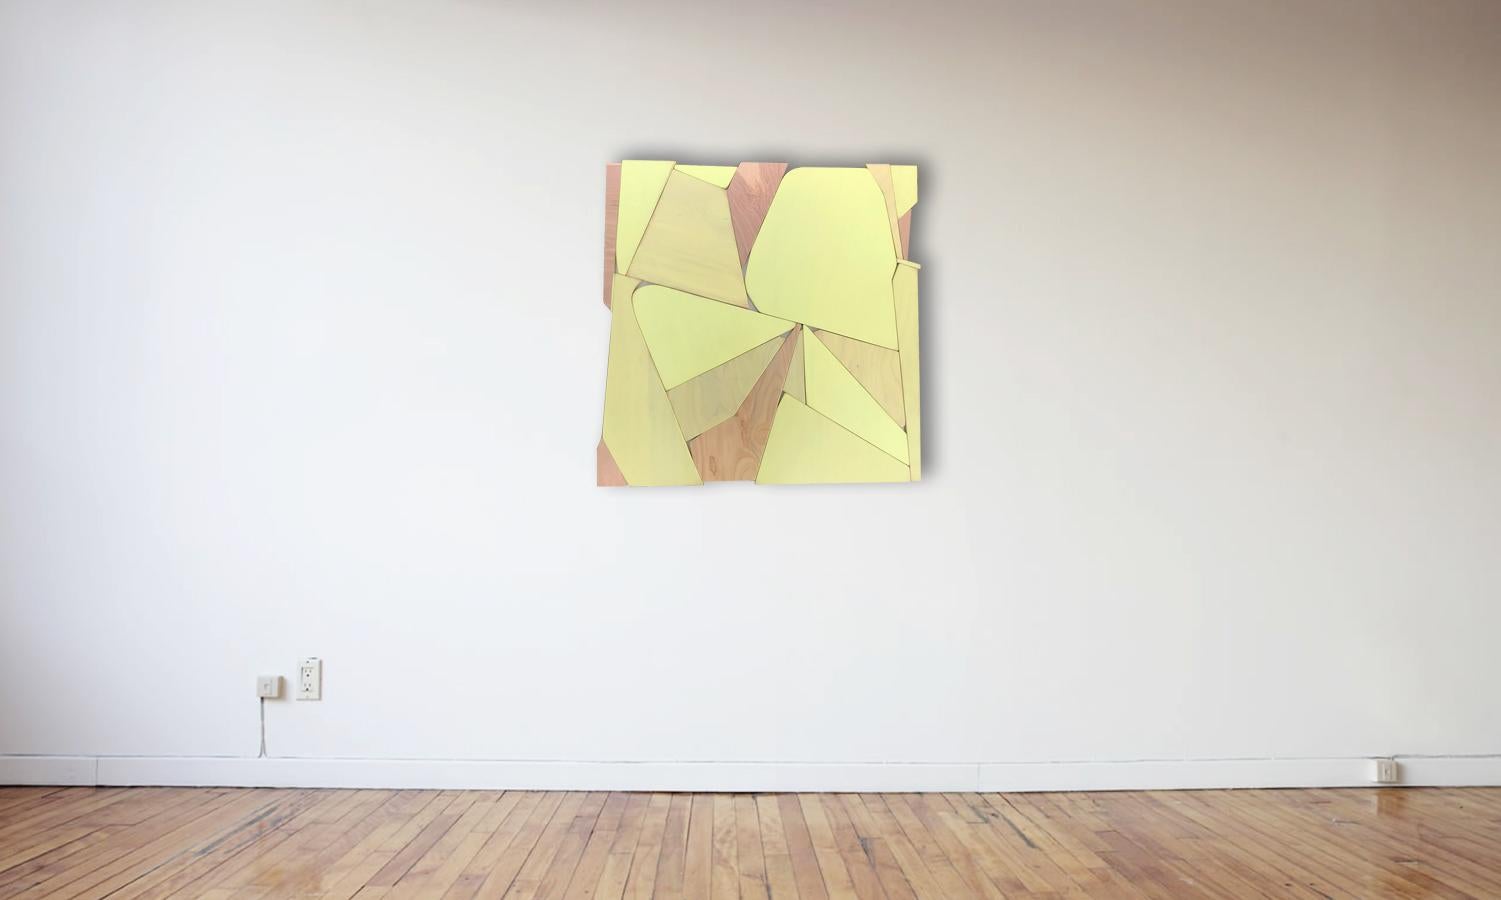 Champagne Sunrise (yellow modern wall sculpture minimal abstract geometric art) - Minimalist Sculpture by Scott Troxel